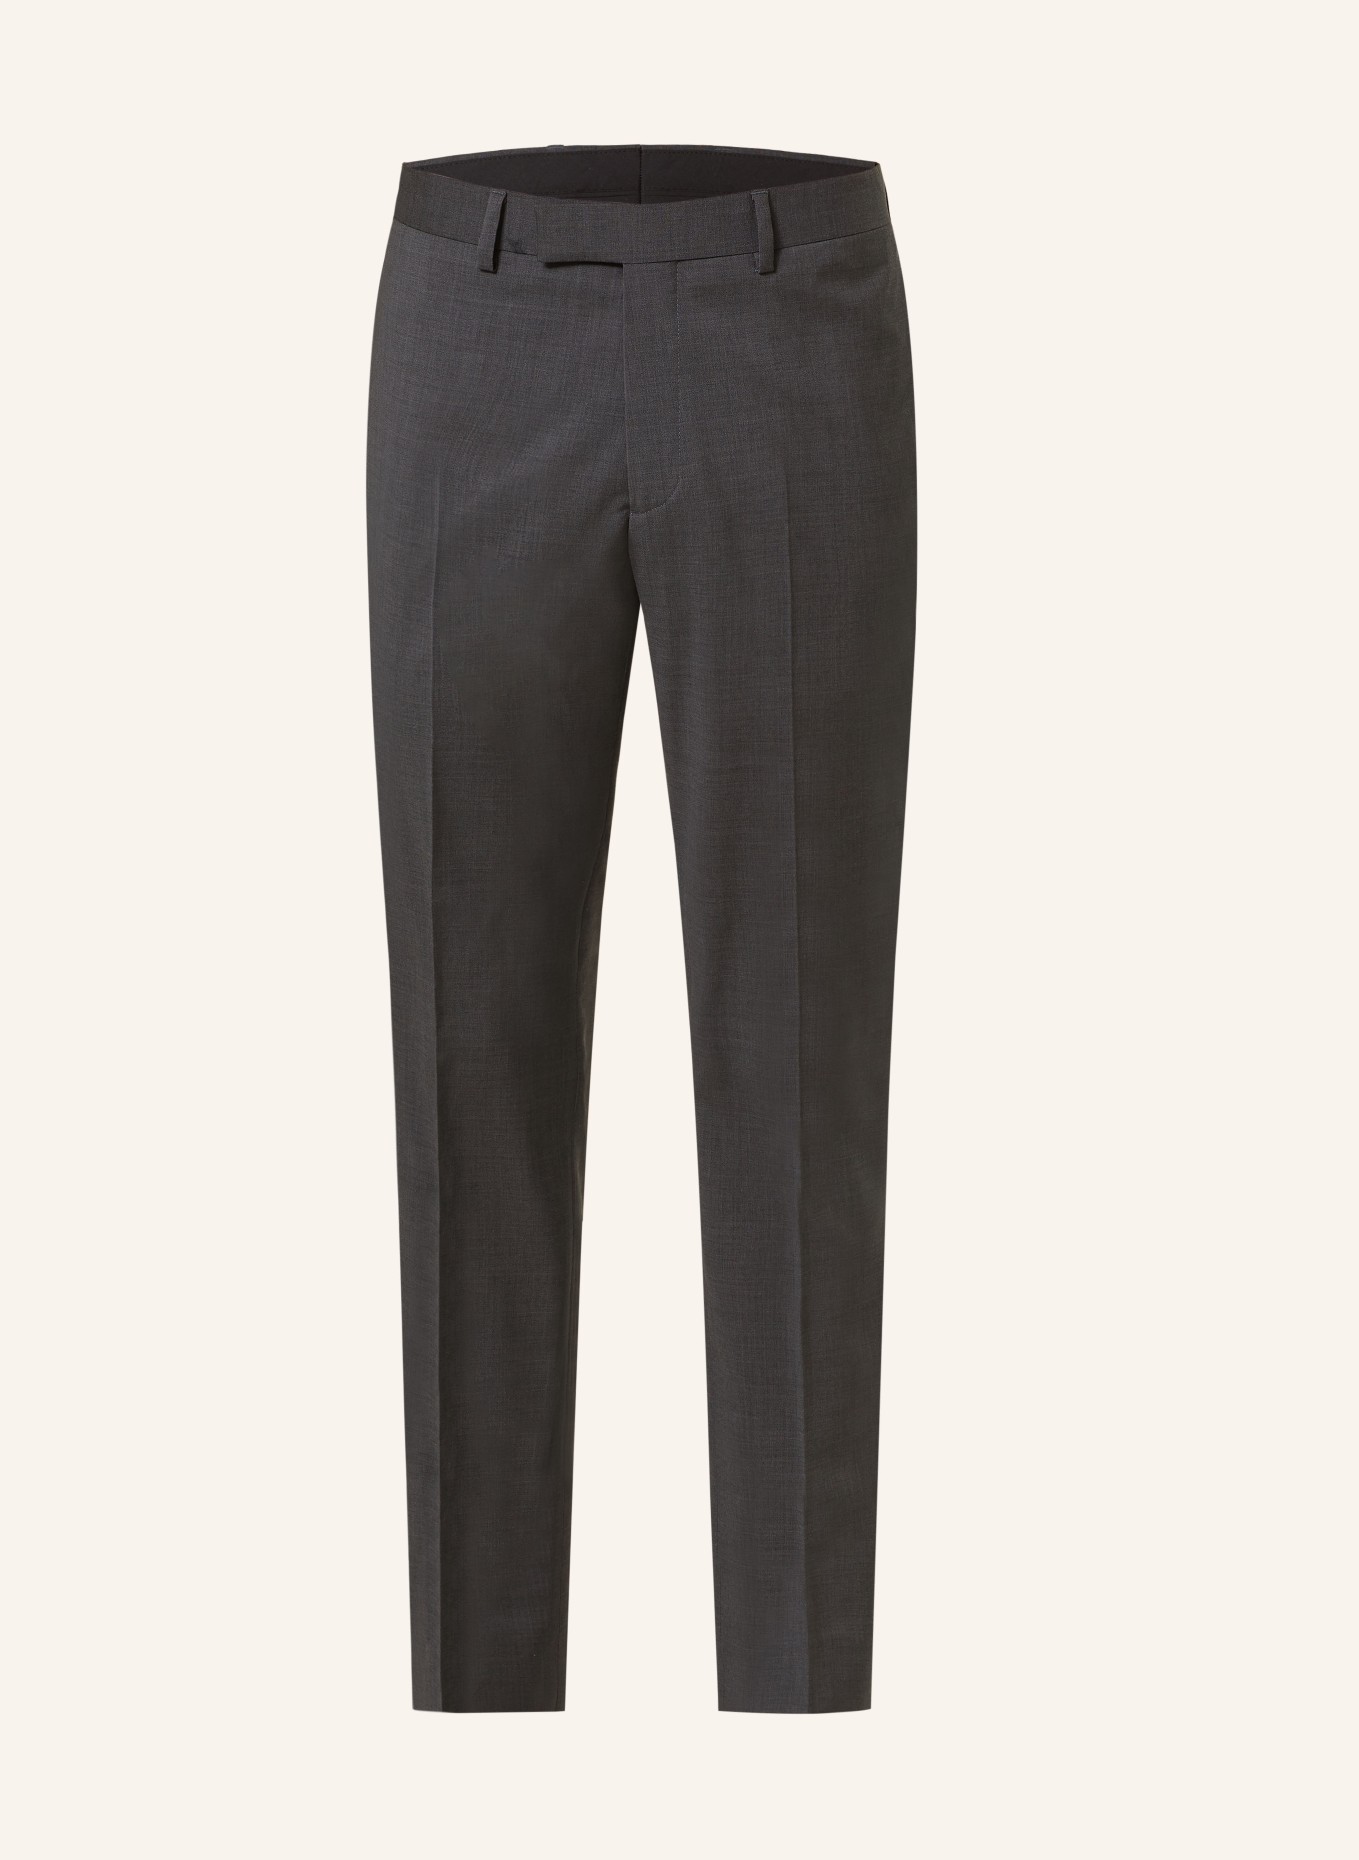 SANDRO Anzughose Slim Fit, Farbe: 21 MOCKED GREY (Bild 1)